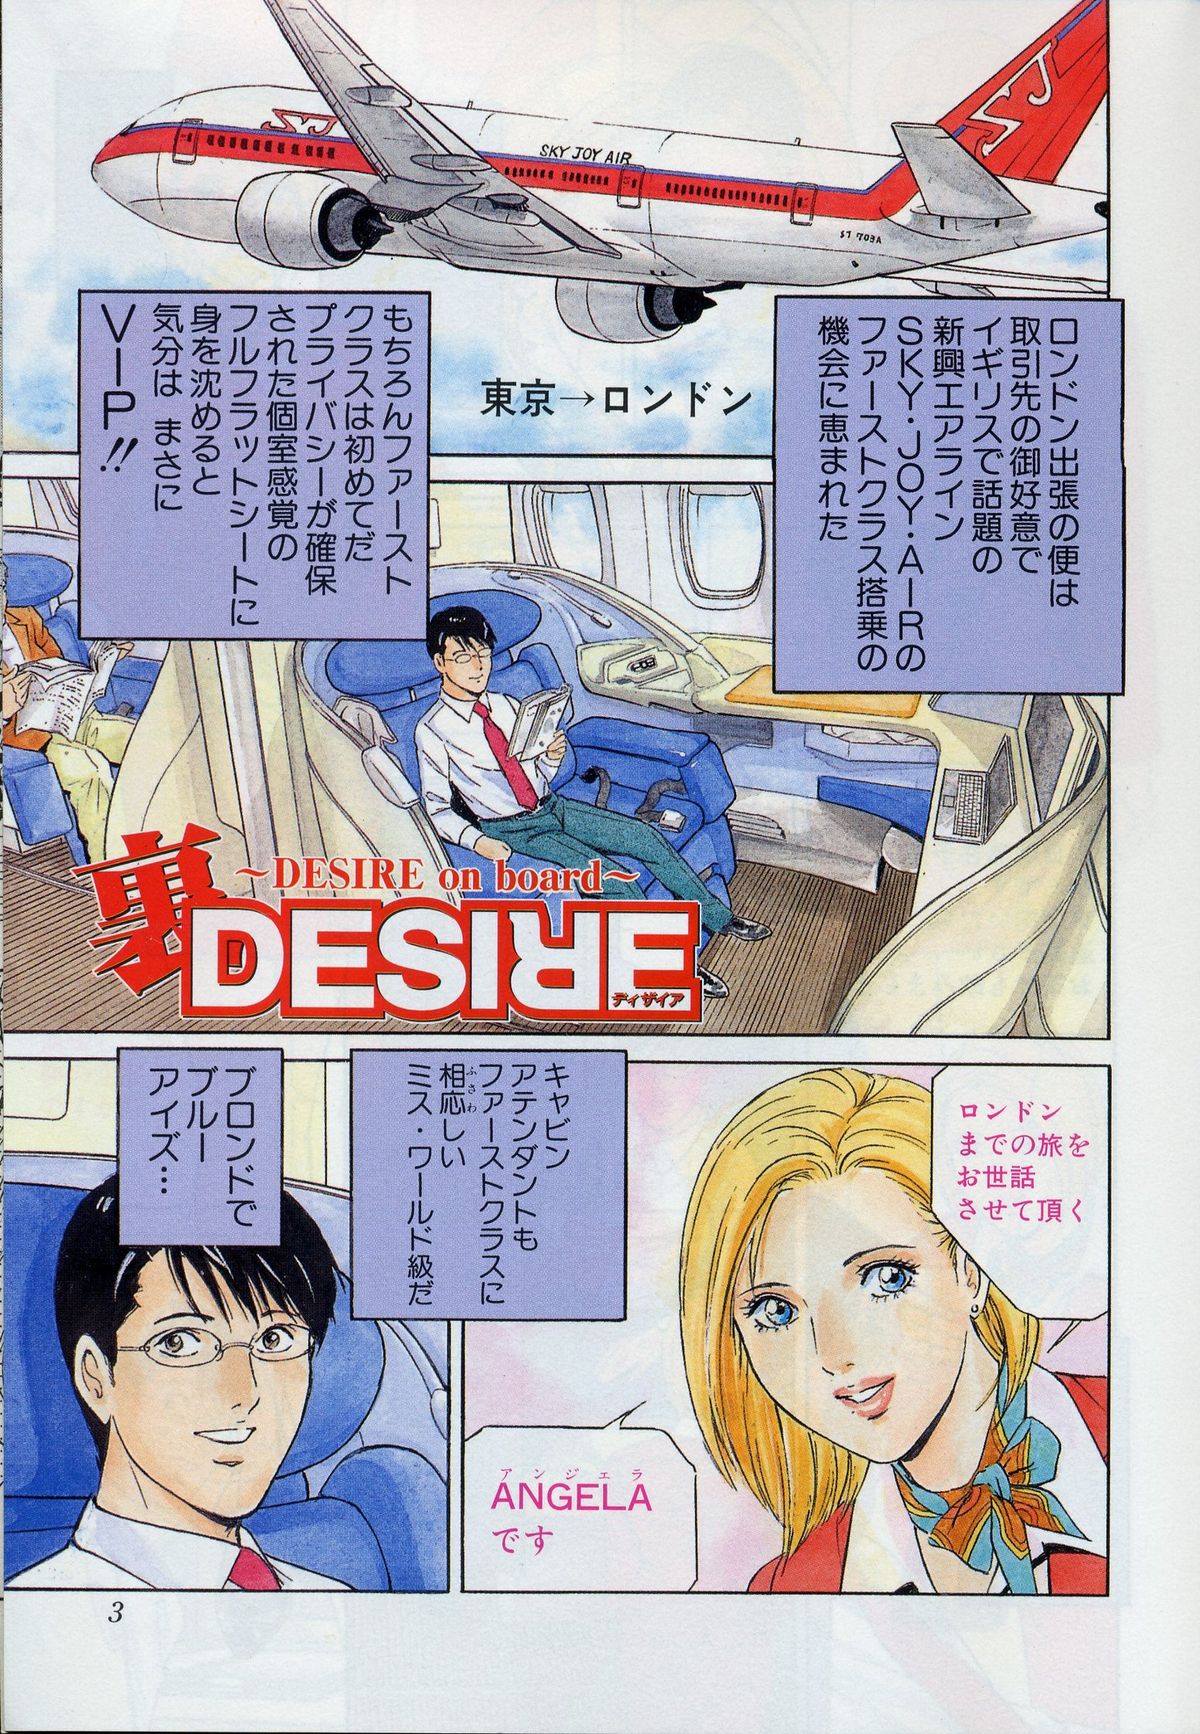 [Kenichi Kotani] Desire 2nd Season 03 